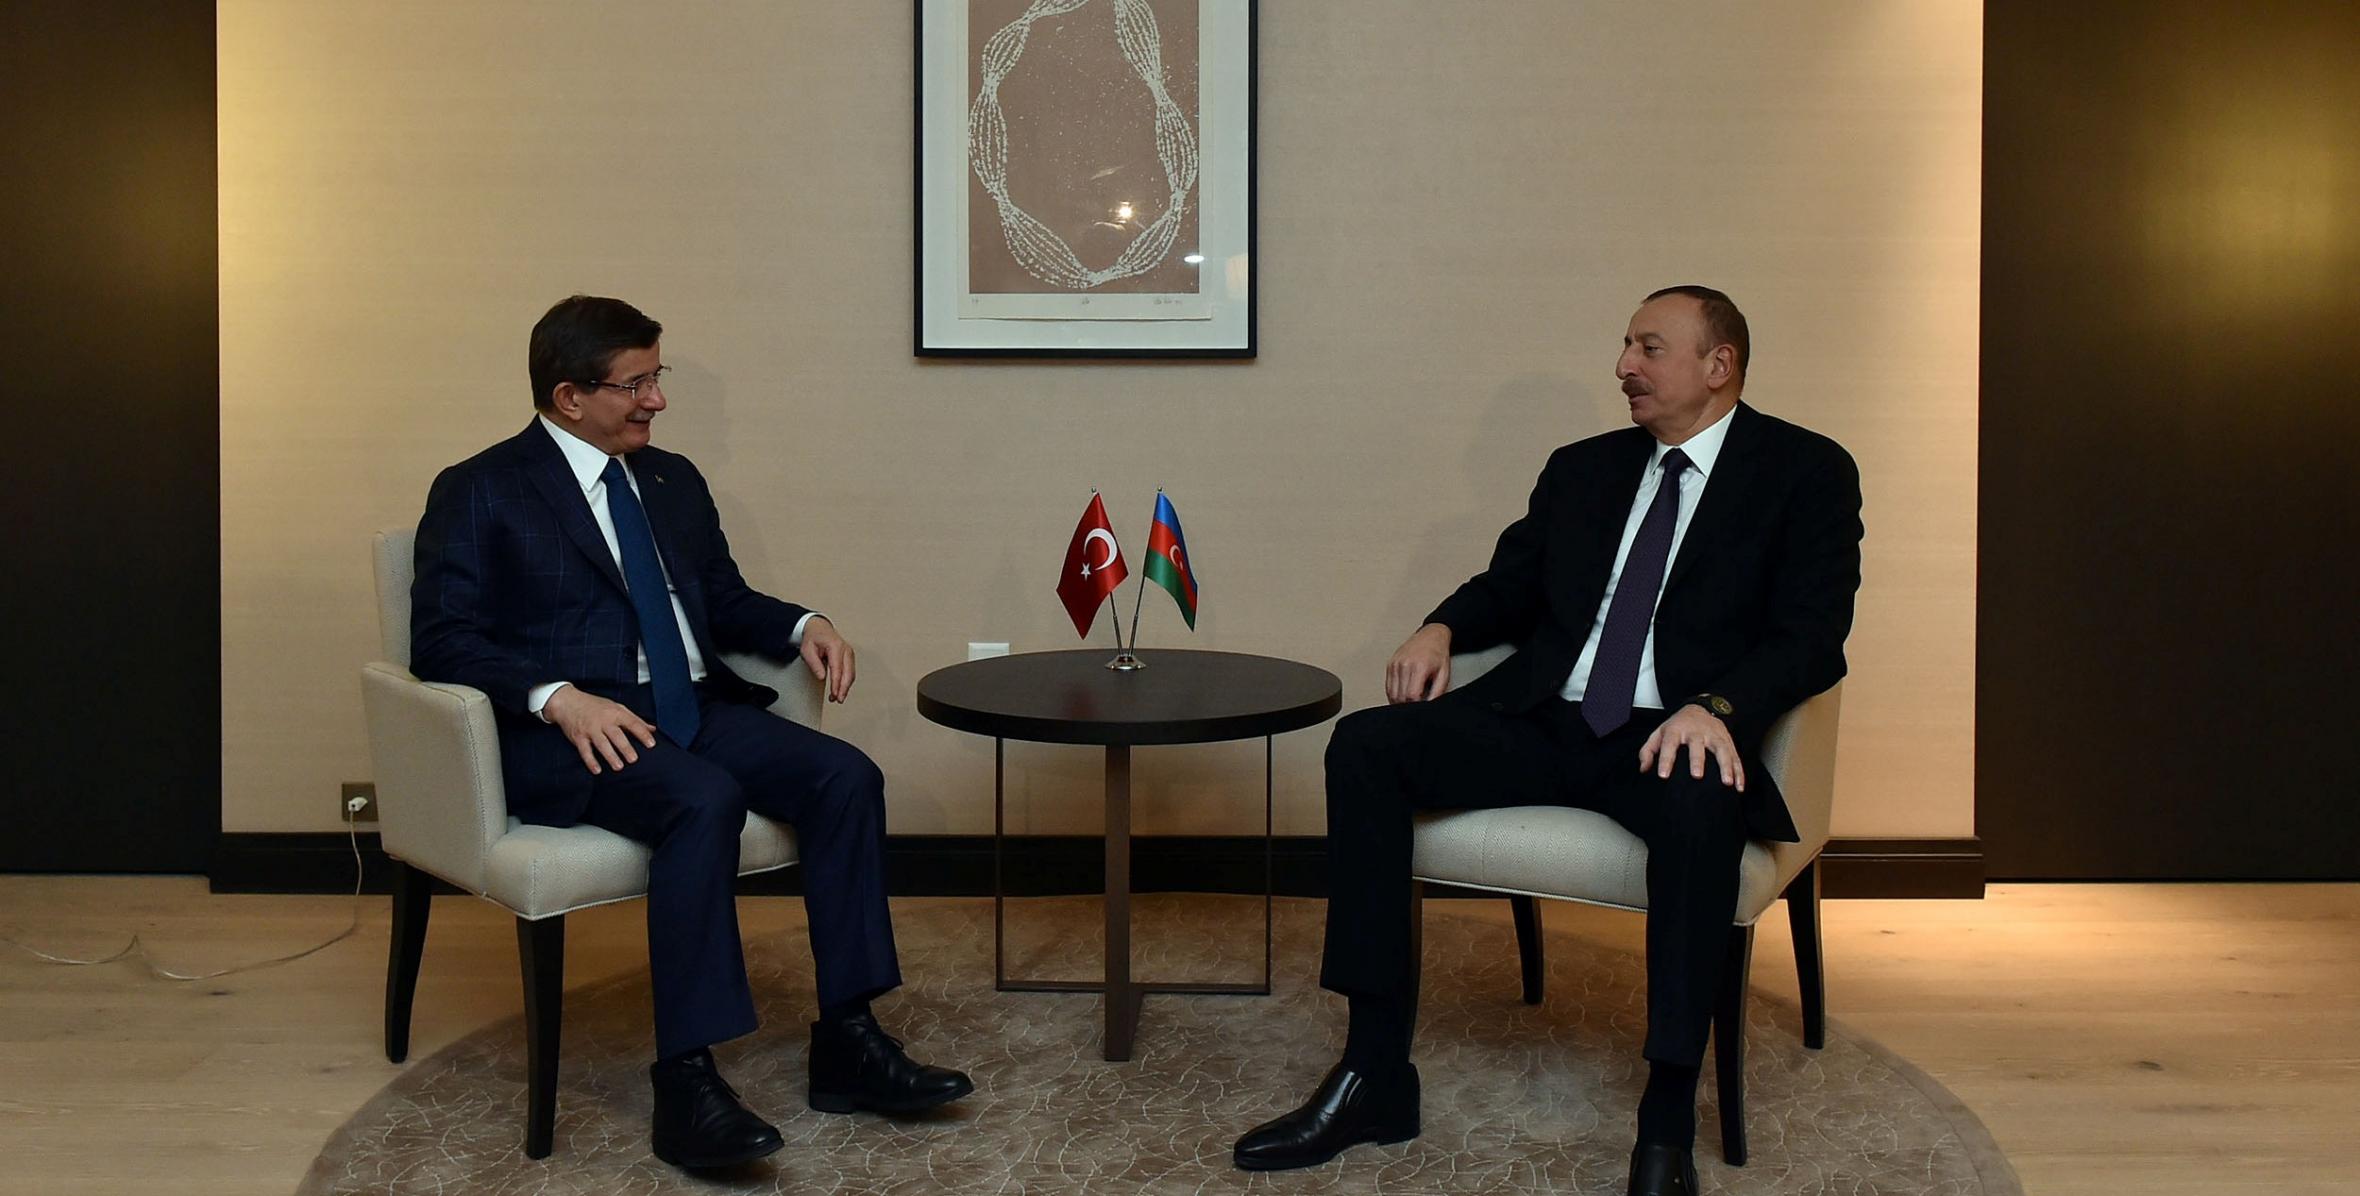 Ilham Aliyev met with Turkish Prime Minister